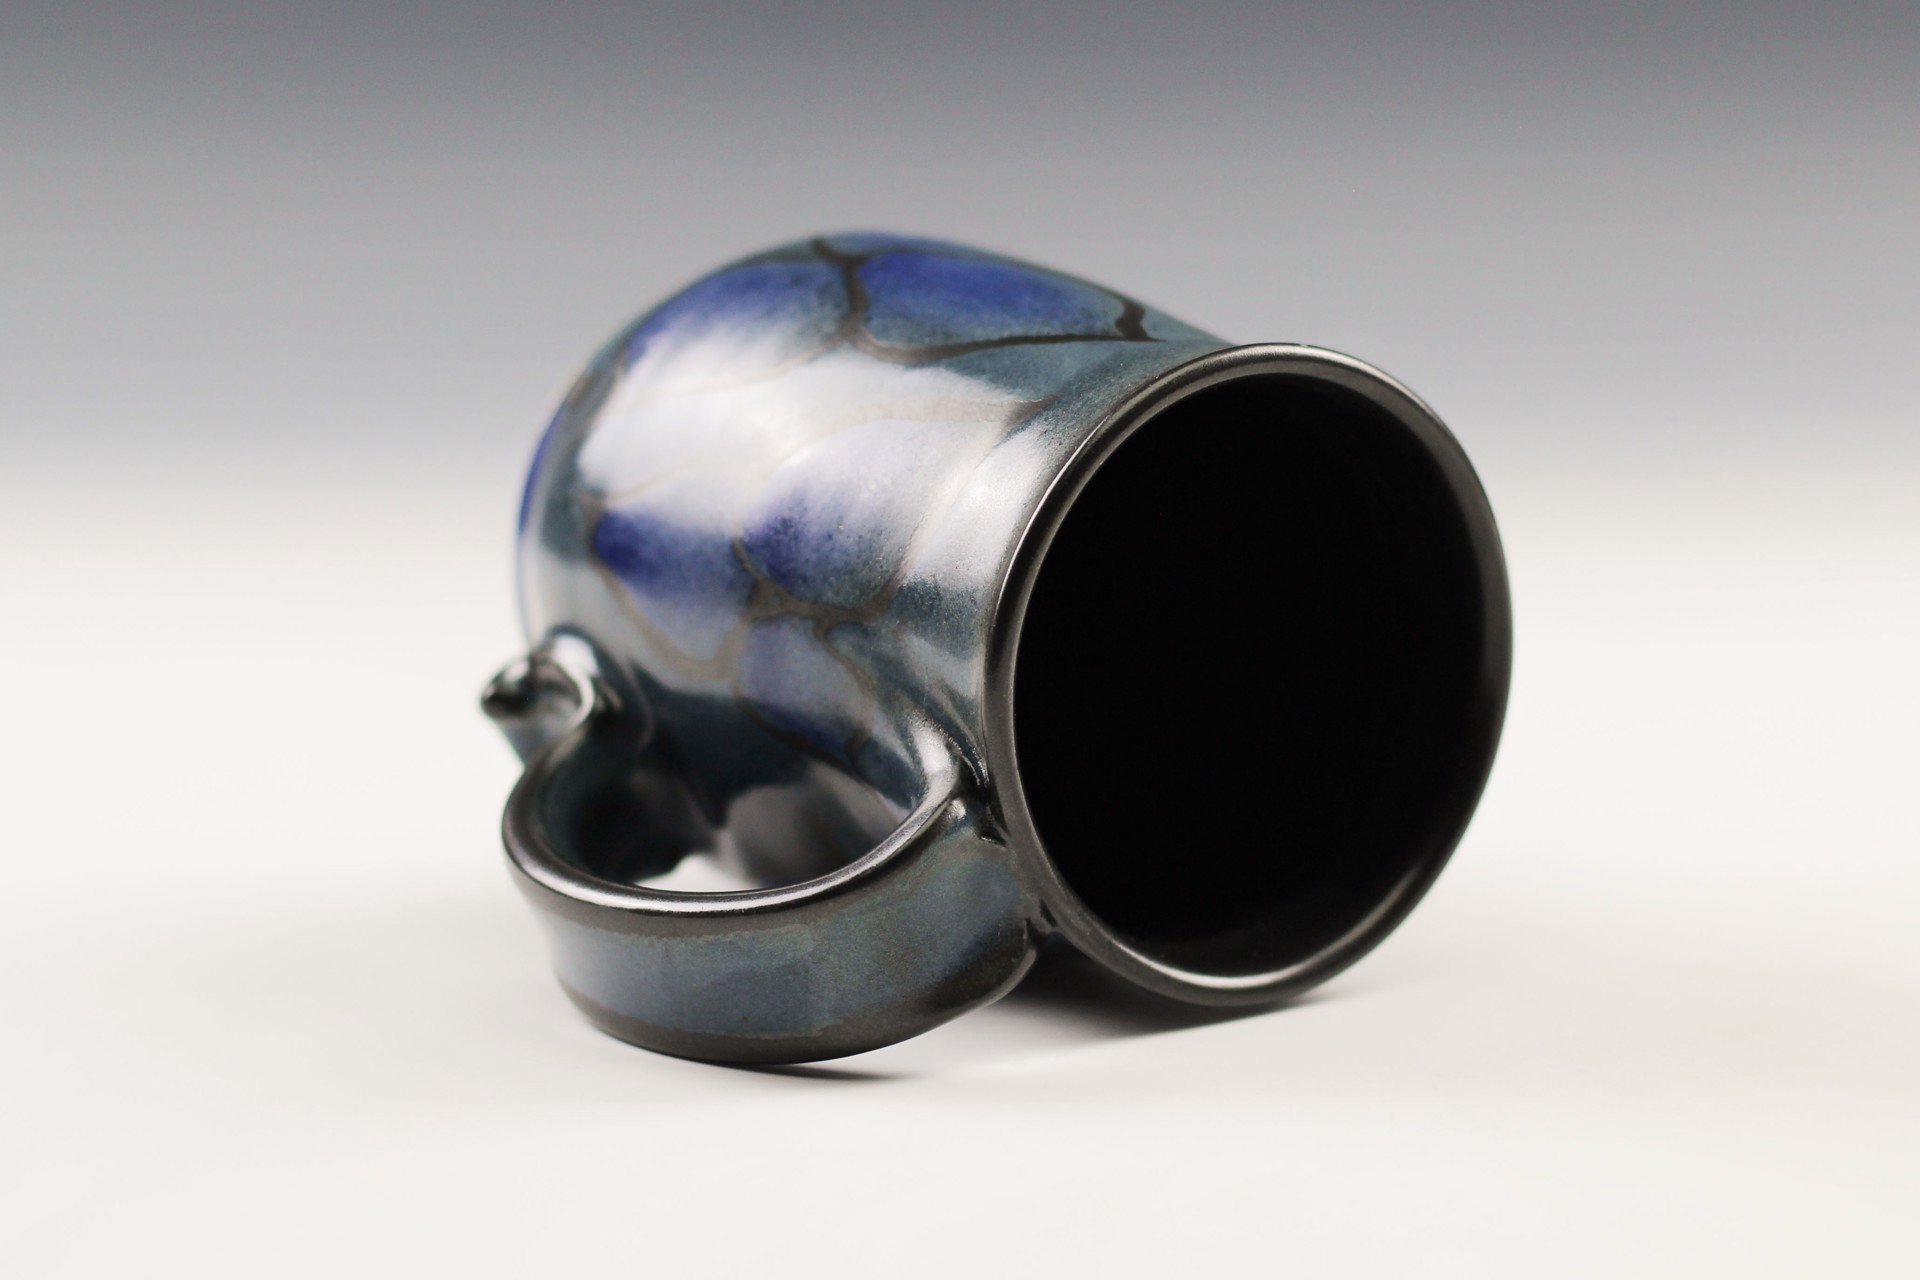 Dark Trillium Mug by Joanne Kirkland